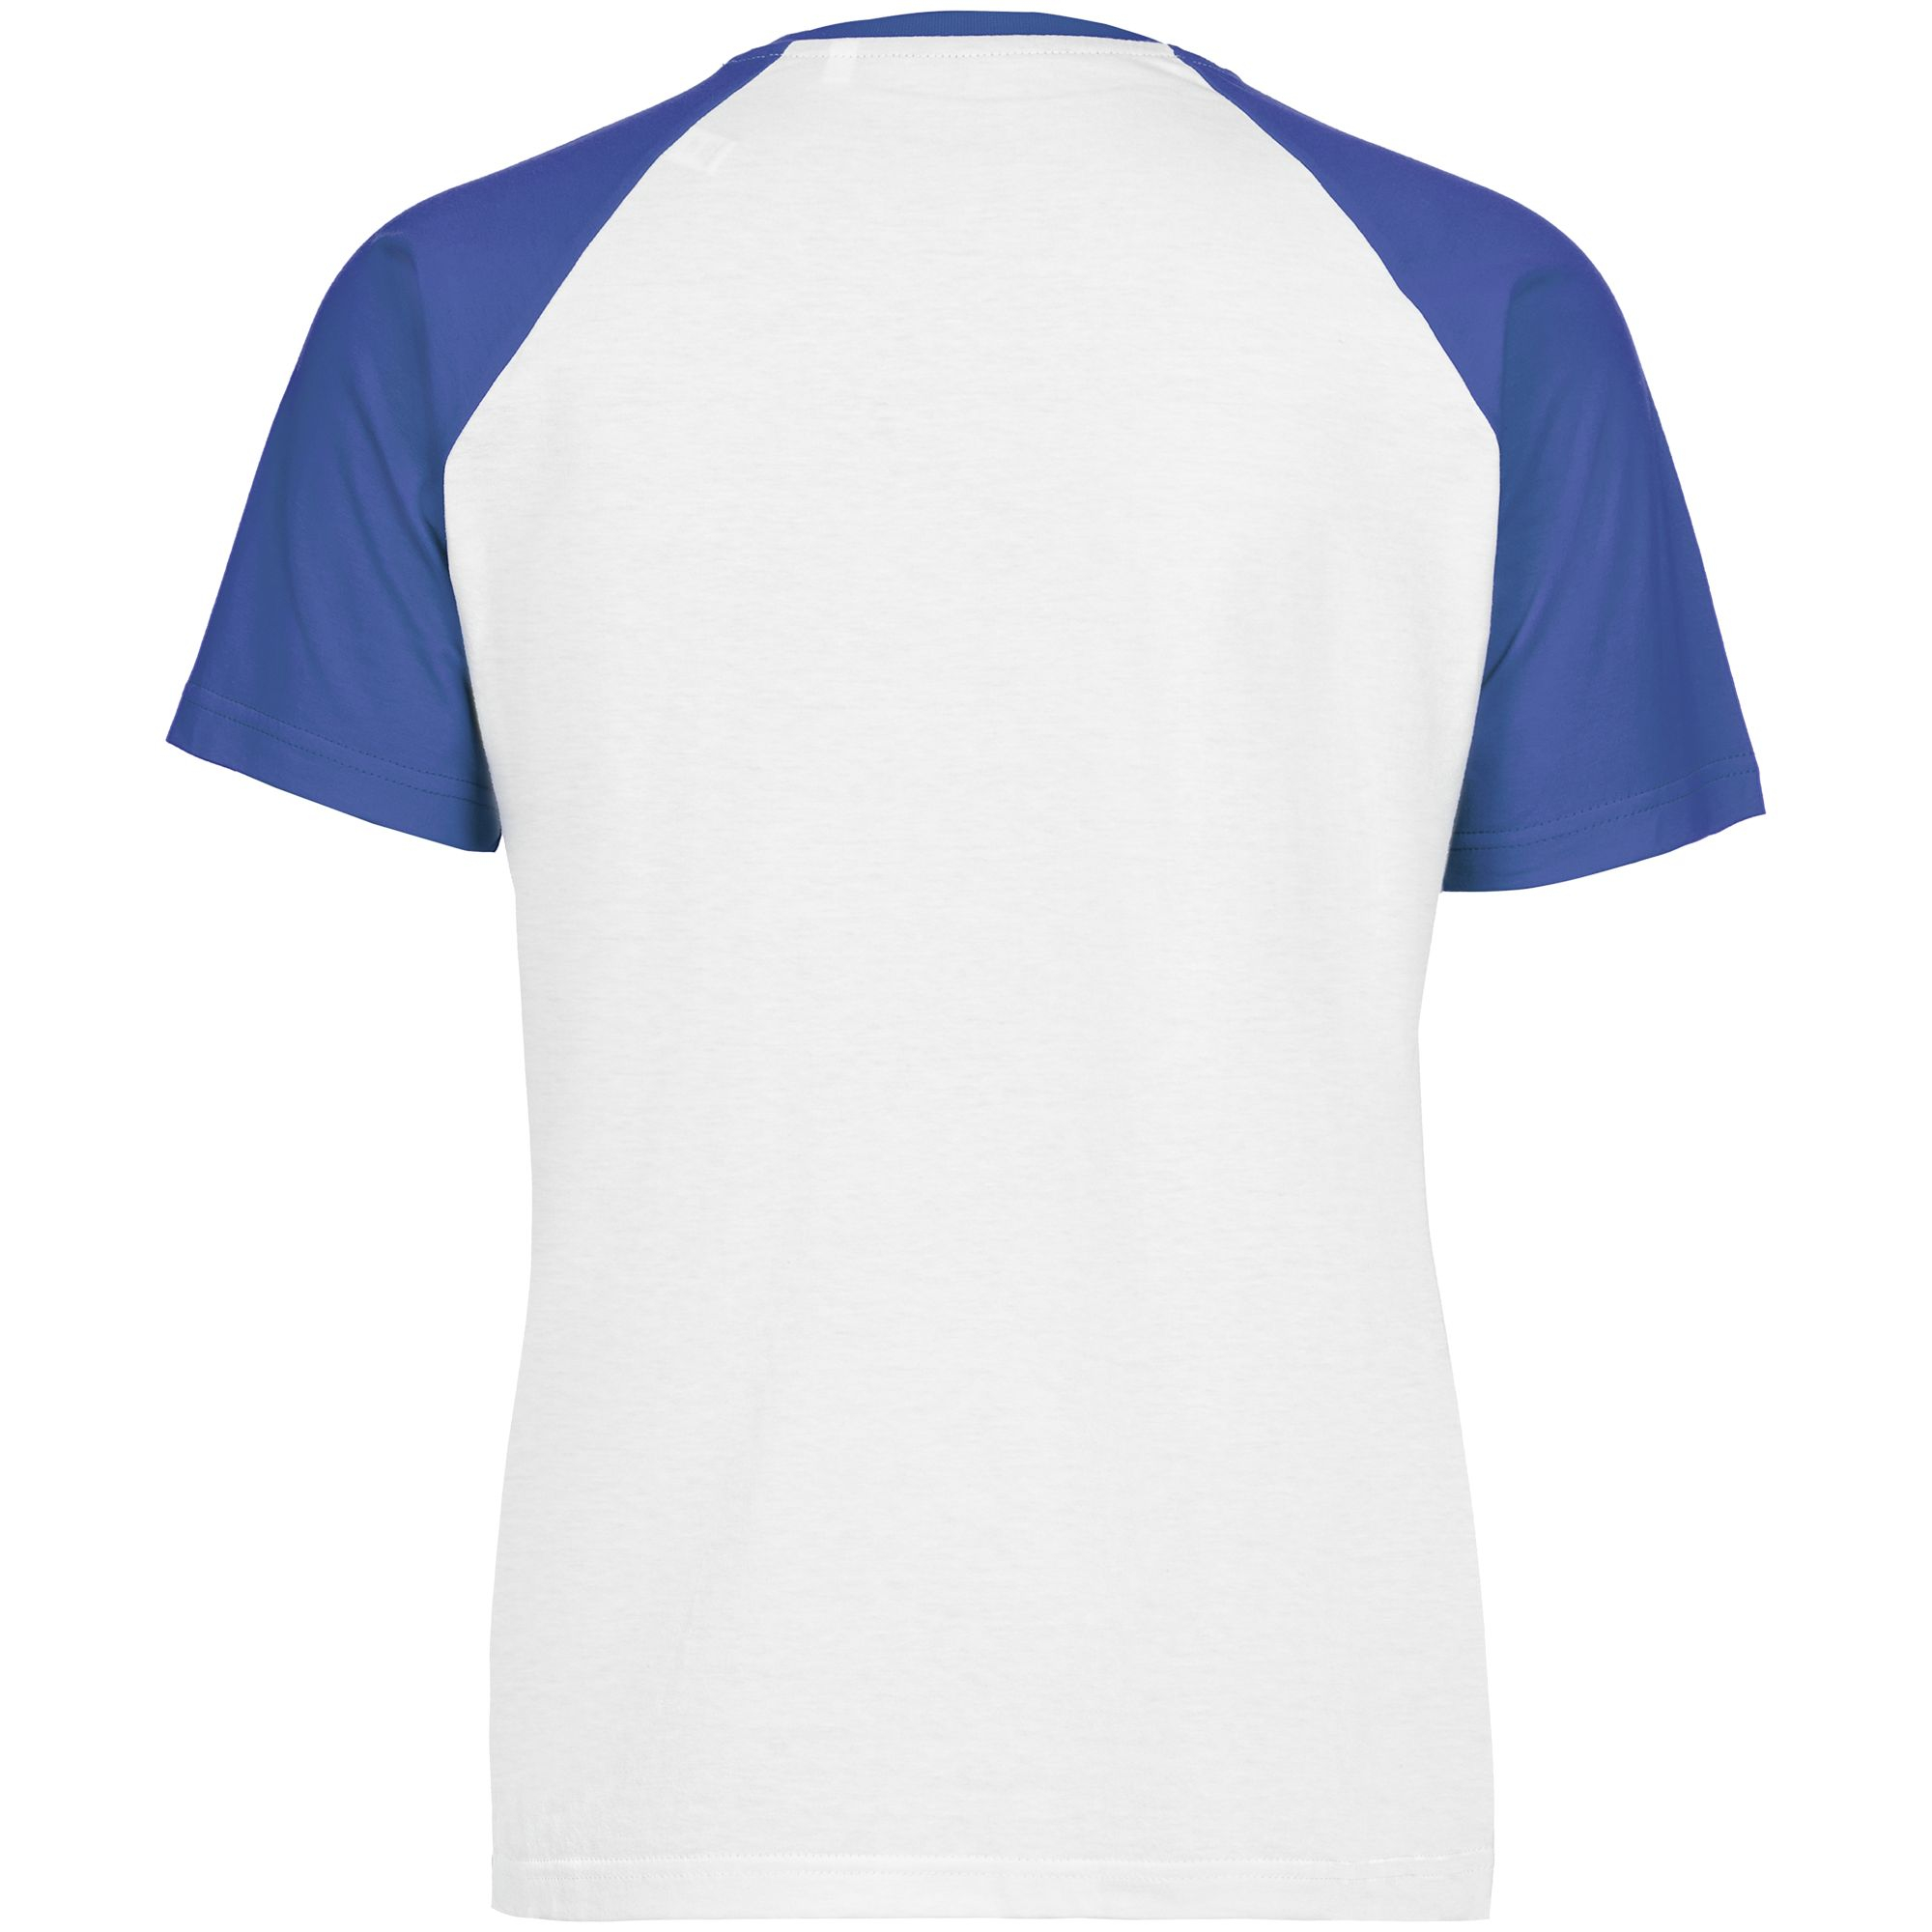 Футболка синими рукавами. Футболка t-Bolka белая XL. Футболка мужская t-Bolka bicolor, белая с черным. Белая футболка с синими рукавами. Футболка с синими рукавами.